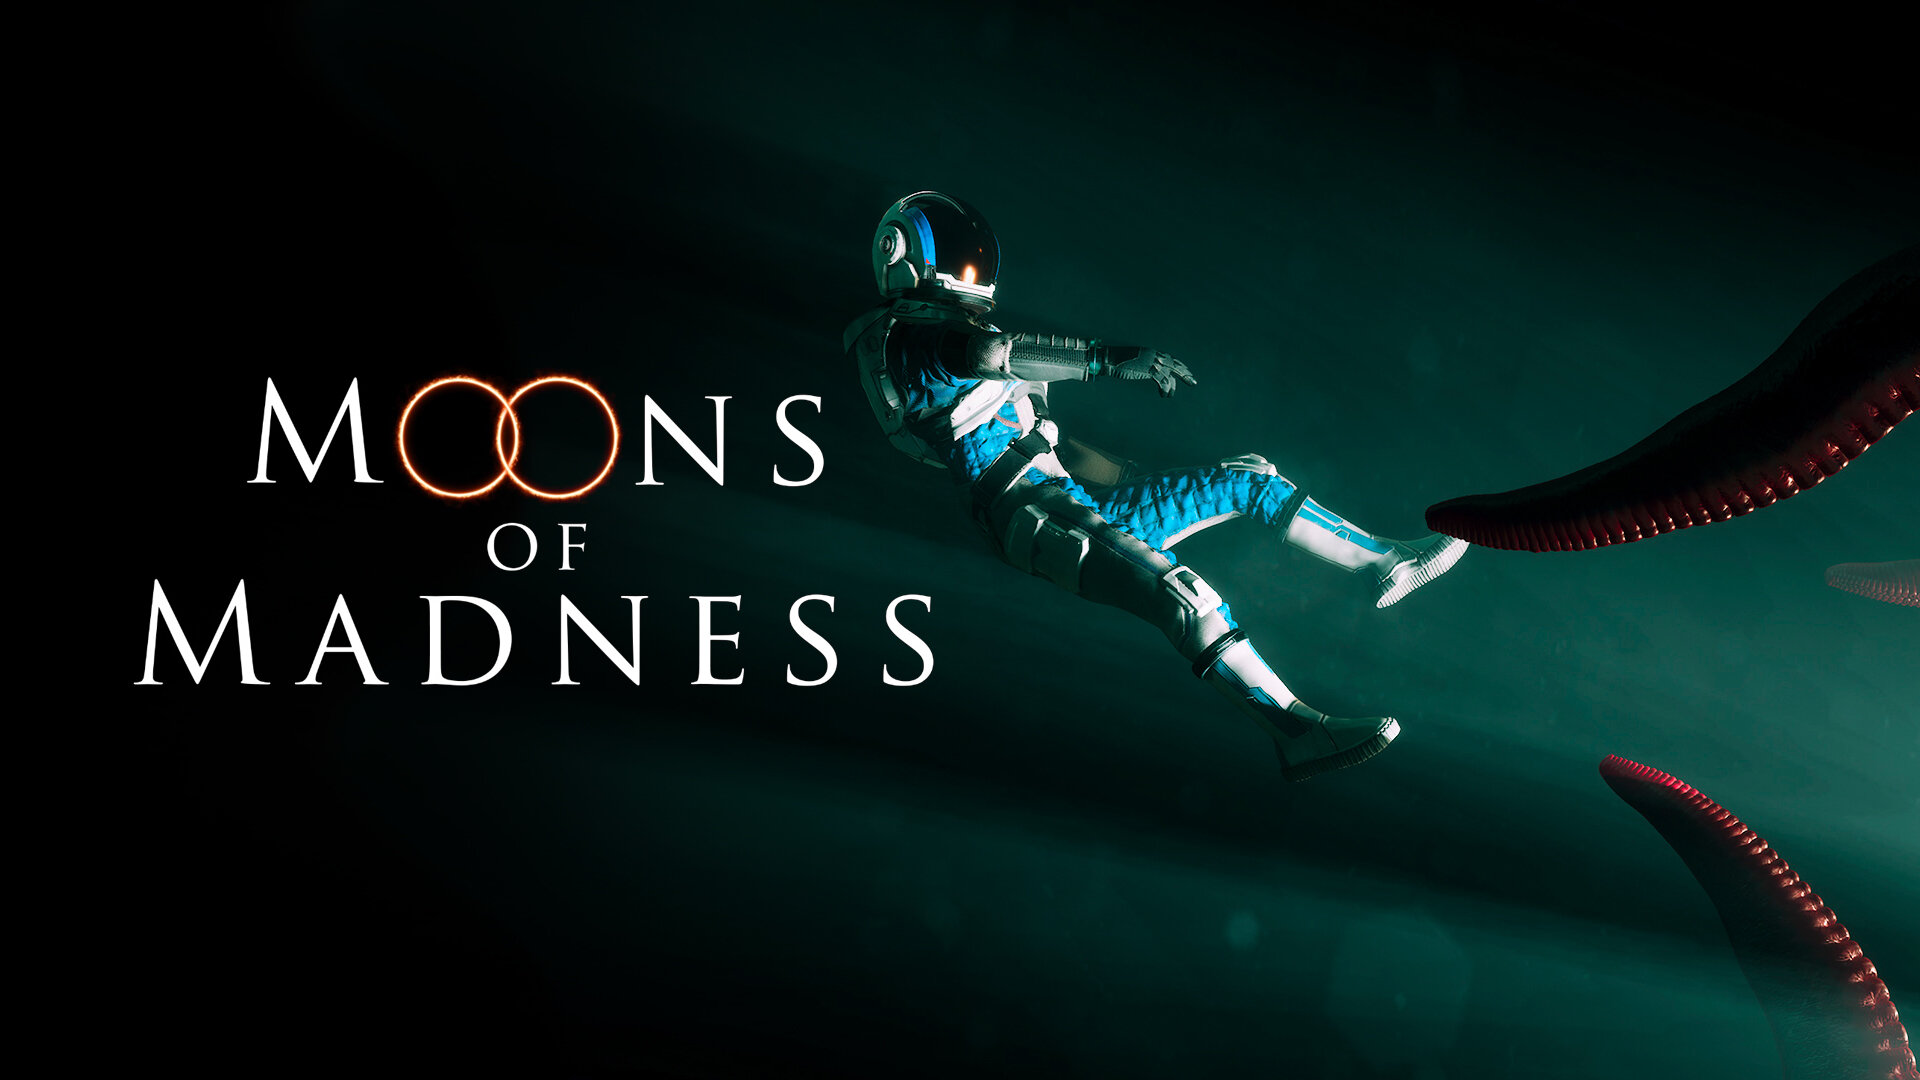 Moons of Madness - RockPocket Games/Funcom - Composer/Sound Design/Audio Director